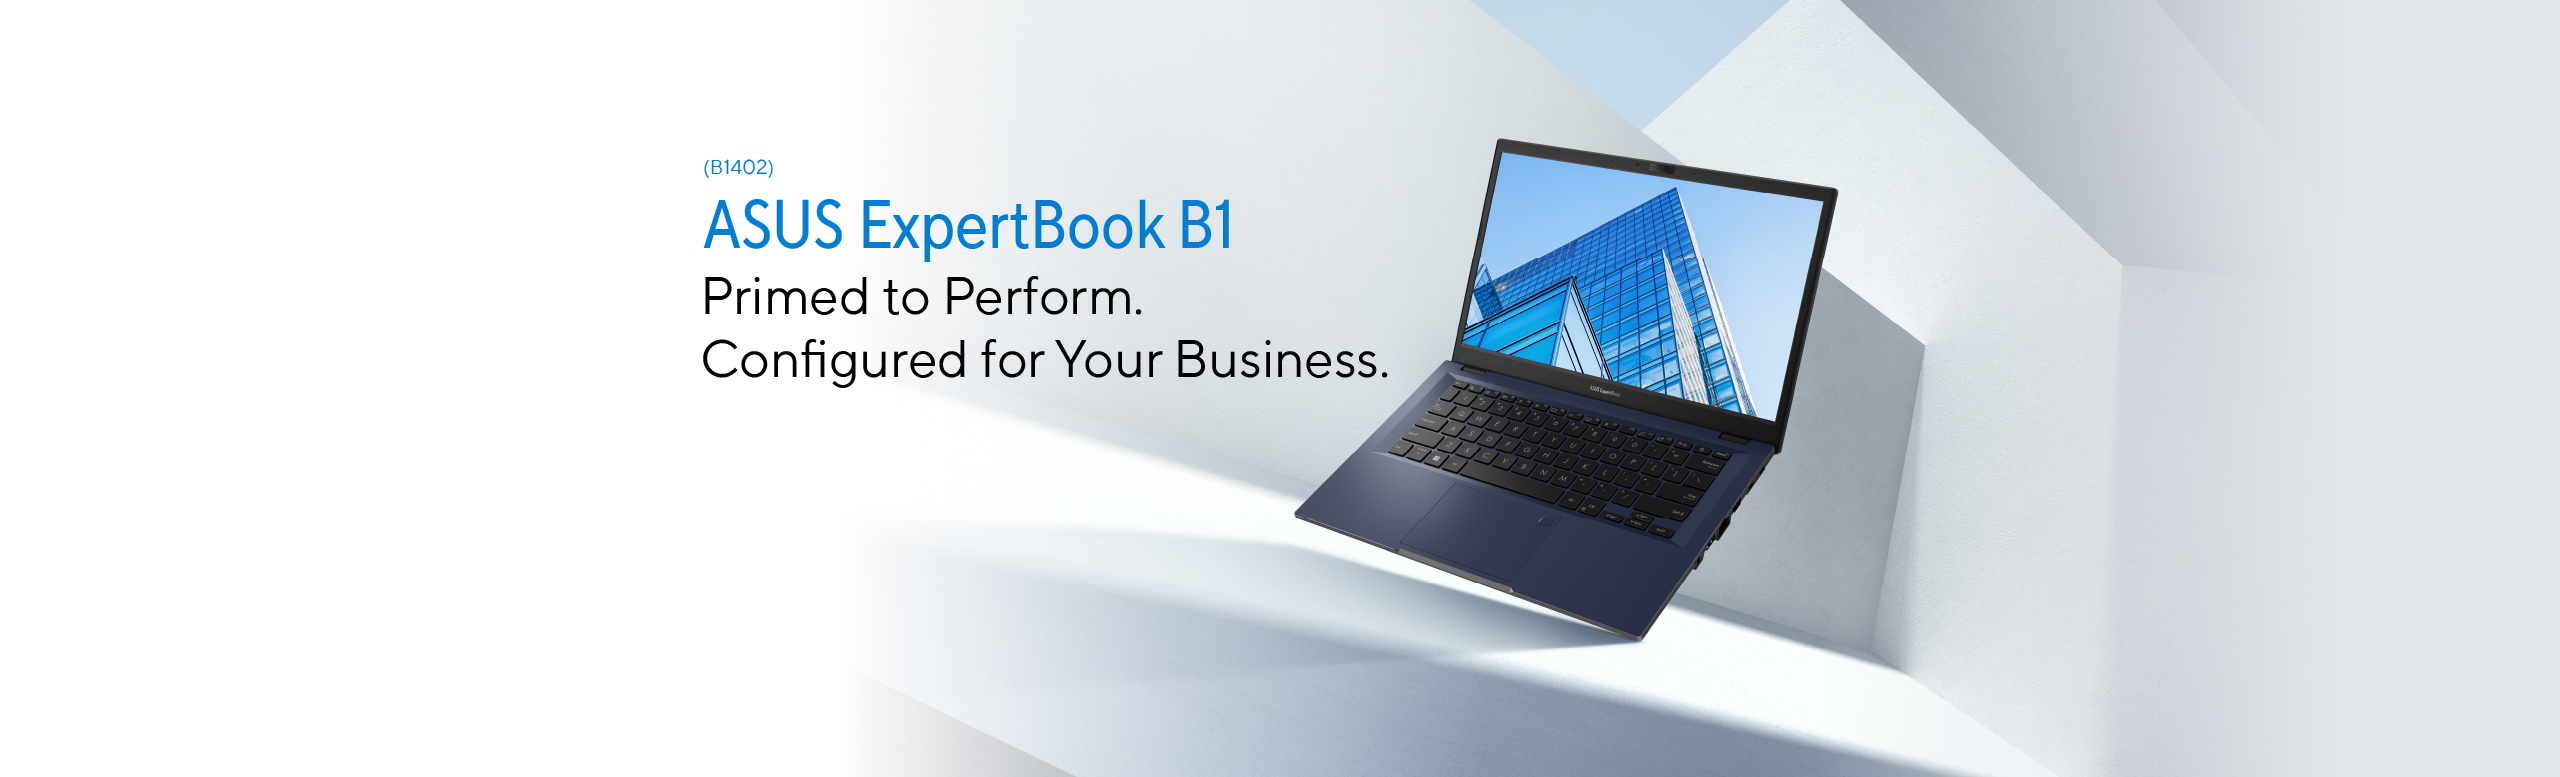 ExpertBook B1 (B1402, 13th Gen Intel)